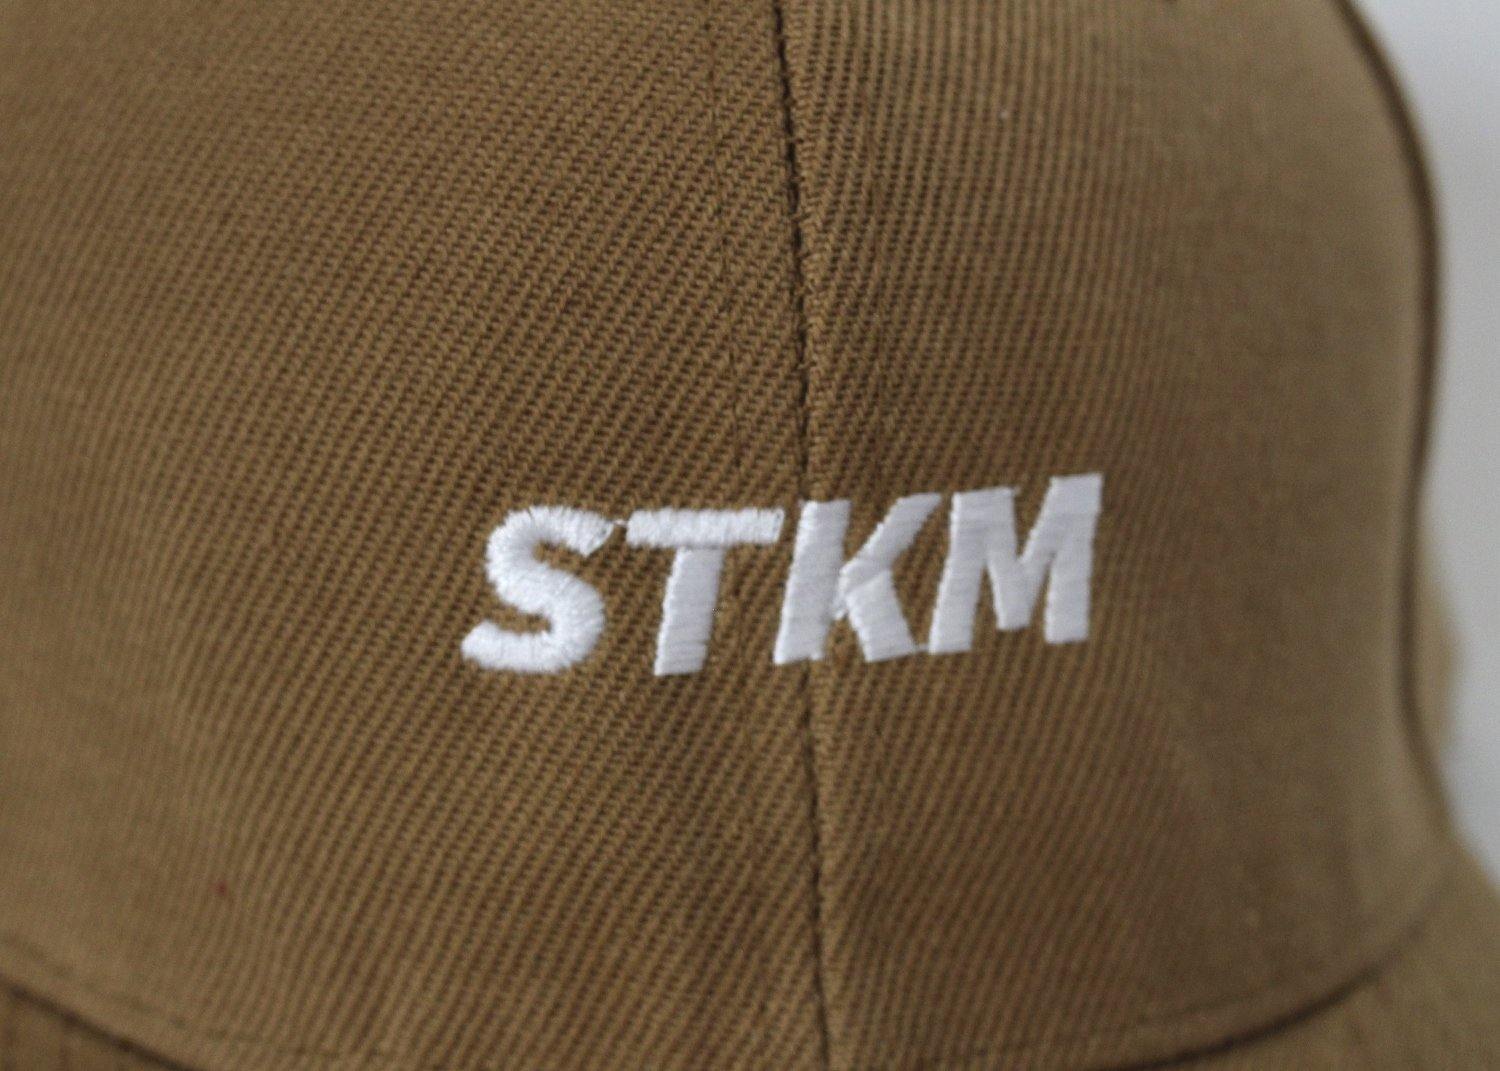 Gorra curvy STKM - 4 colores diferentes - Stockholm Co. - Gorra - accesorios